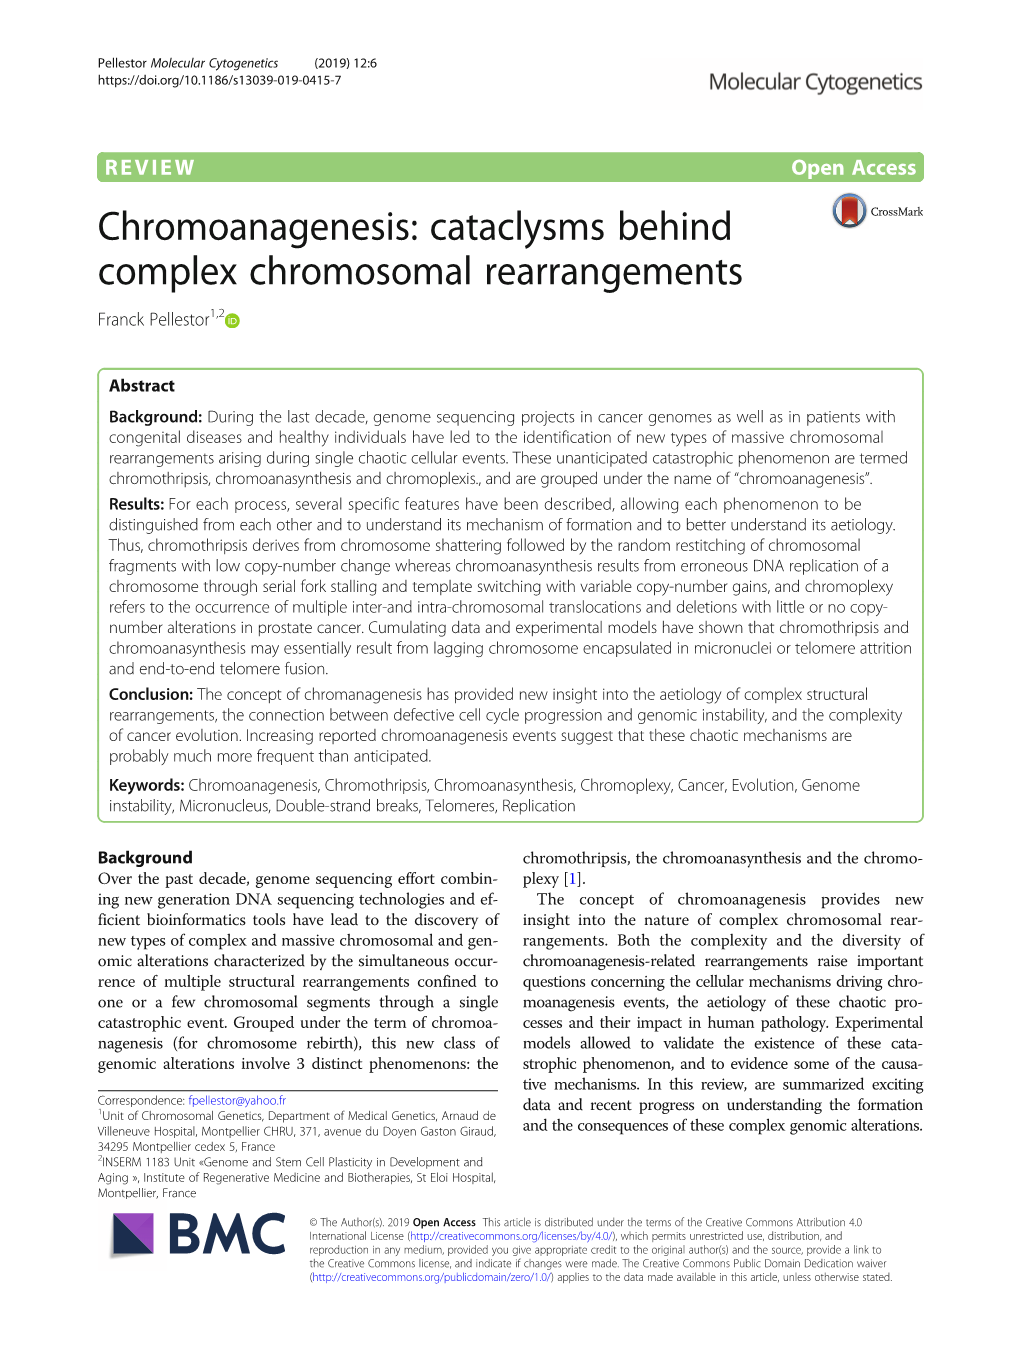 Chromoanagenesis: Cataclysms Behind Complex Chromosomal Rearrangements Franck Pellestor1,2